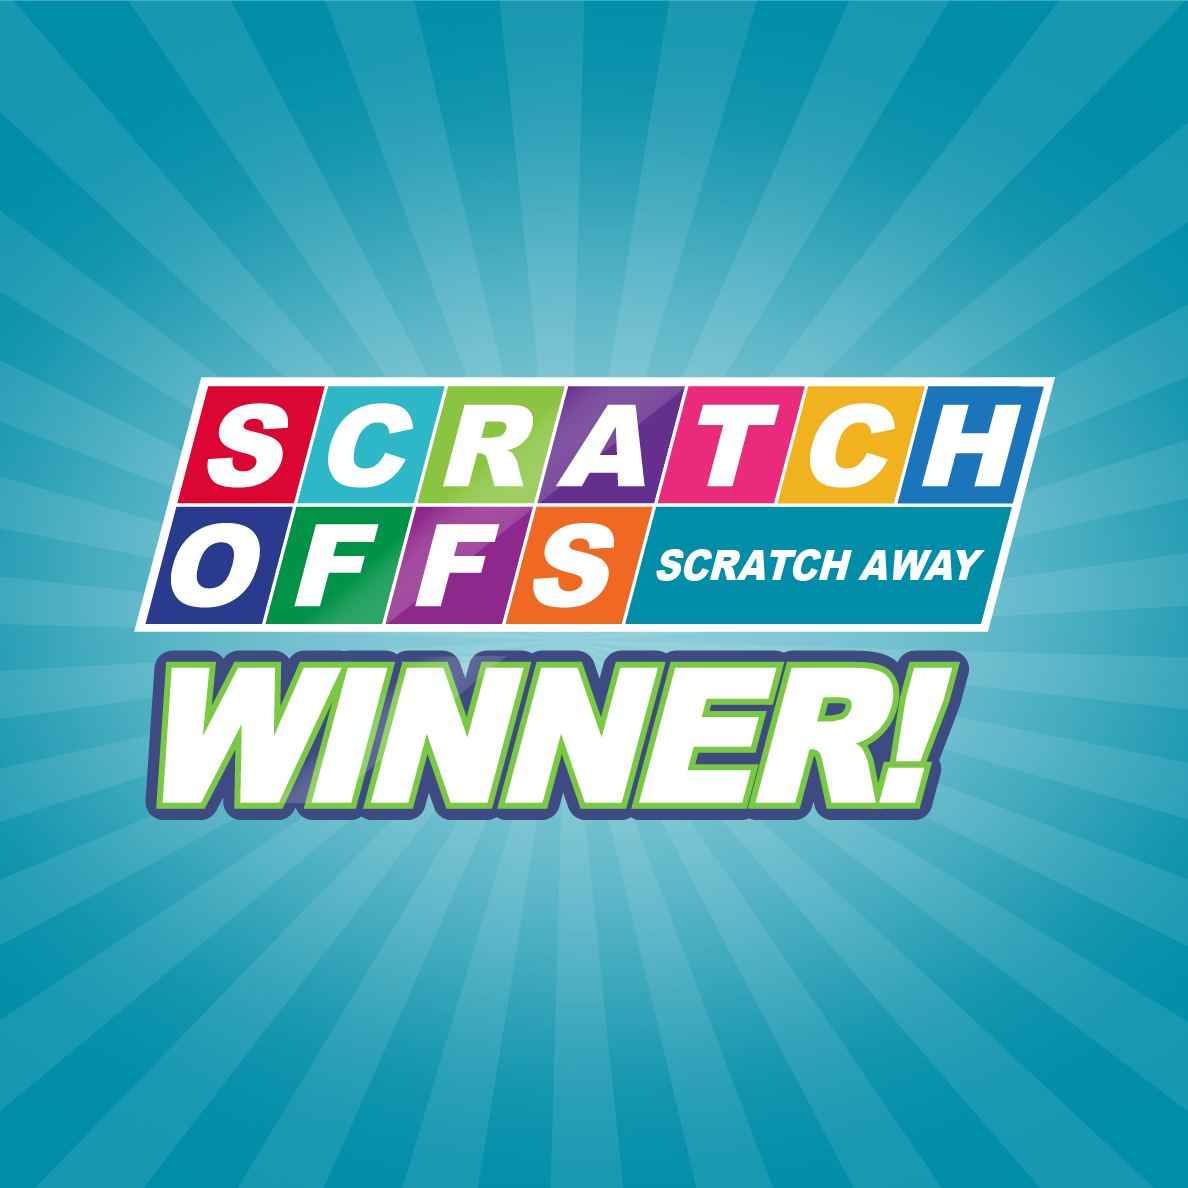 Avid Bingo Player Wins Top Prize on Scratch-off